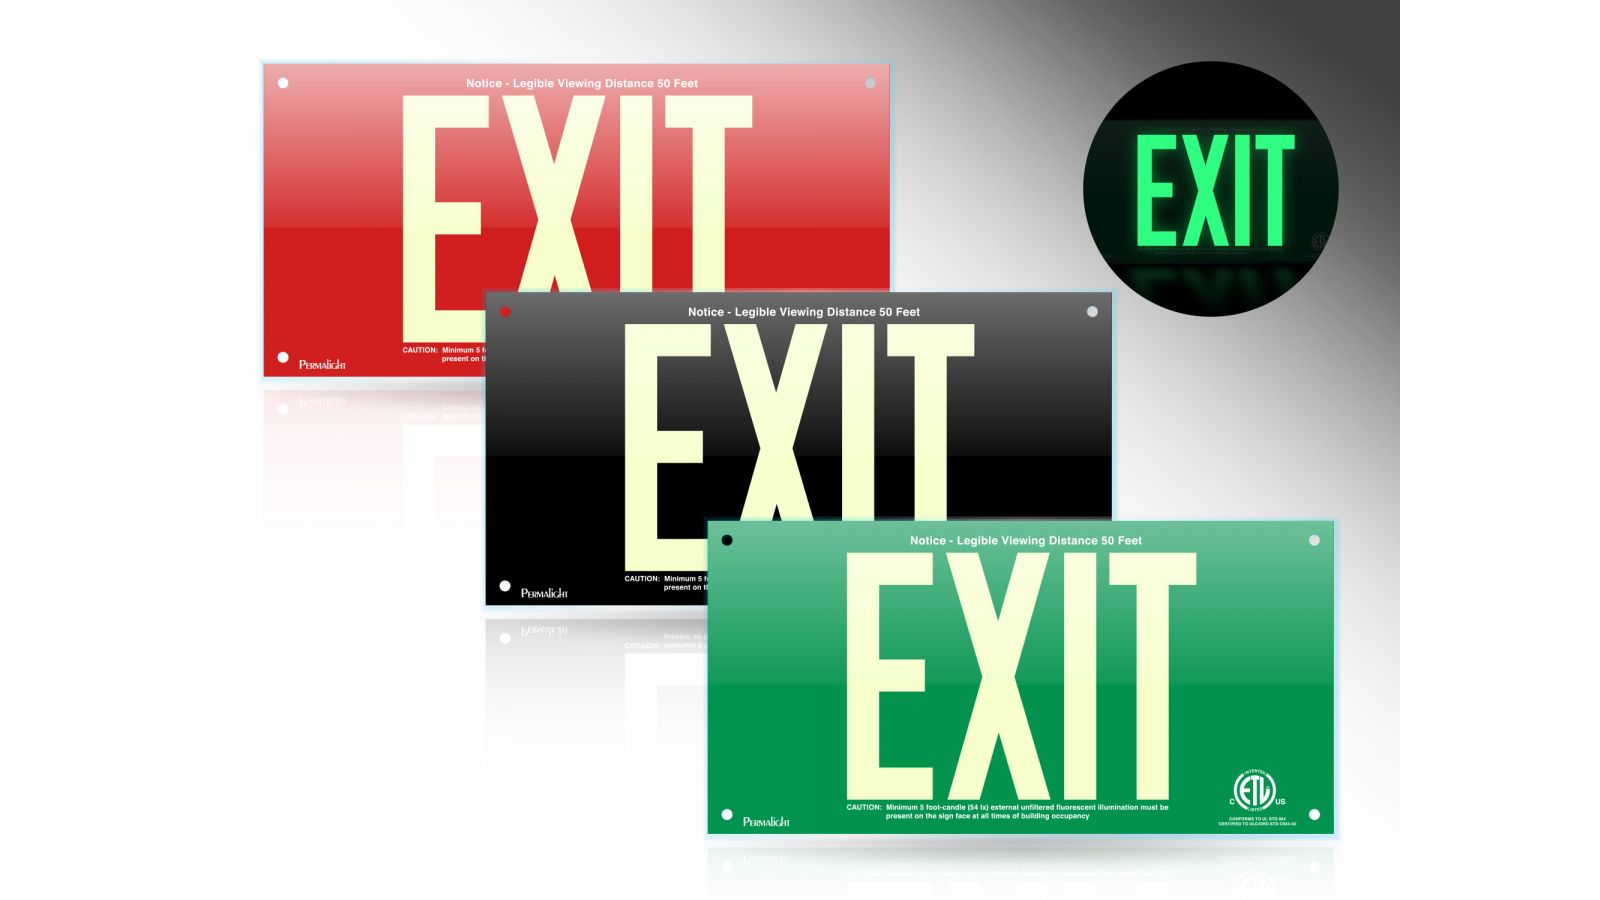 Acrylic Photoluminescent Exit Signs